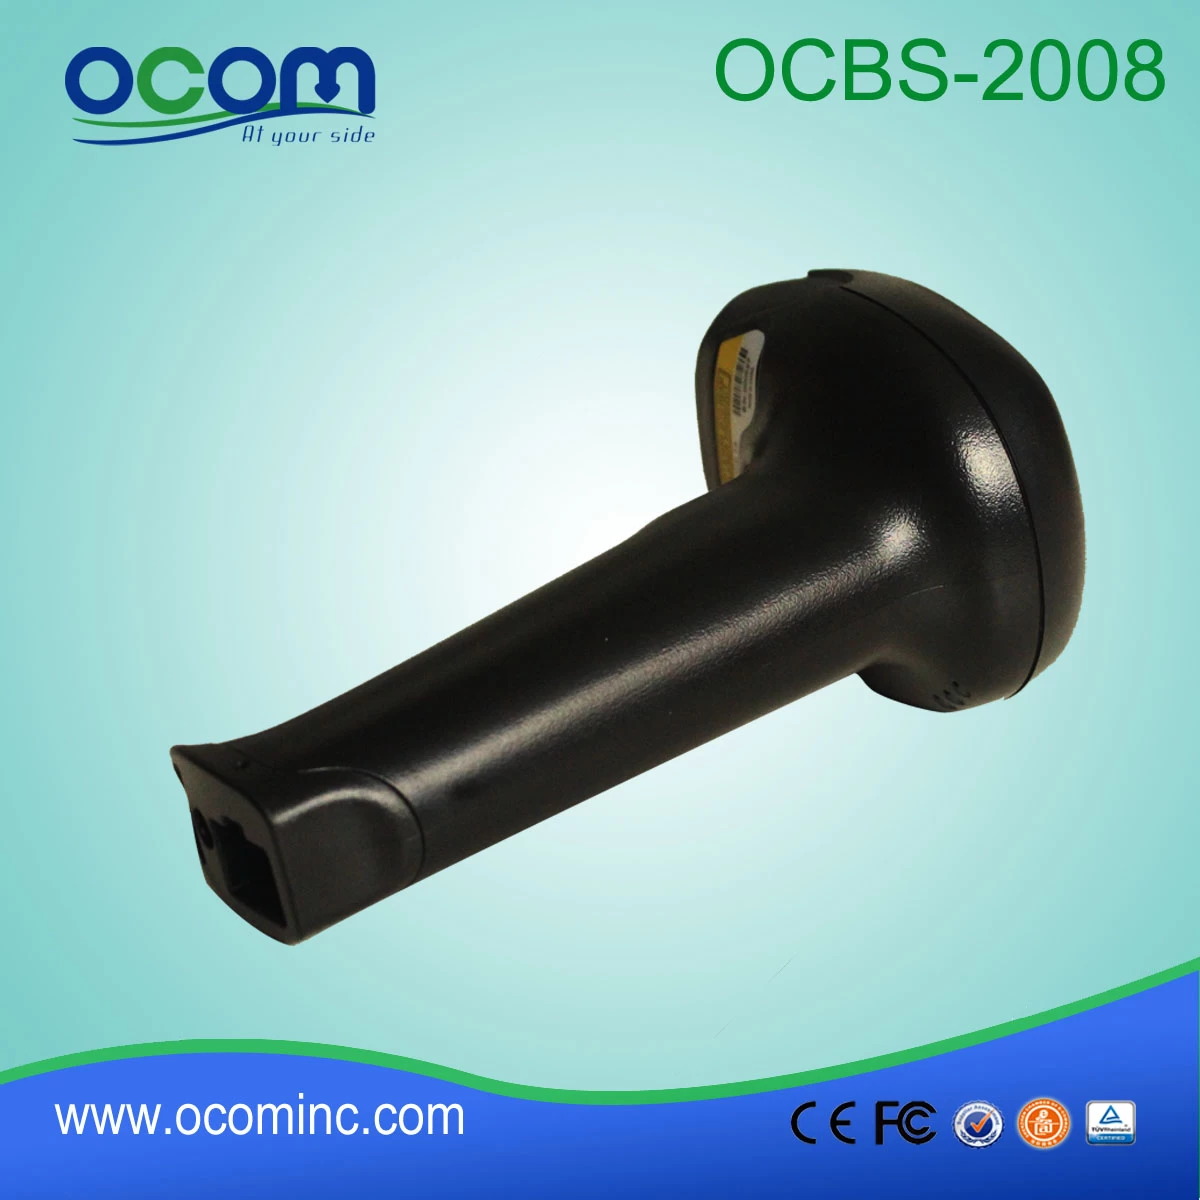 2D QR code Image Barcode Scanner (OCBS-2008)